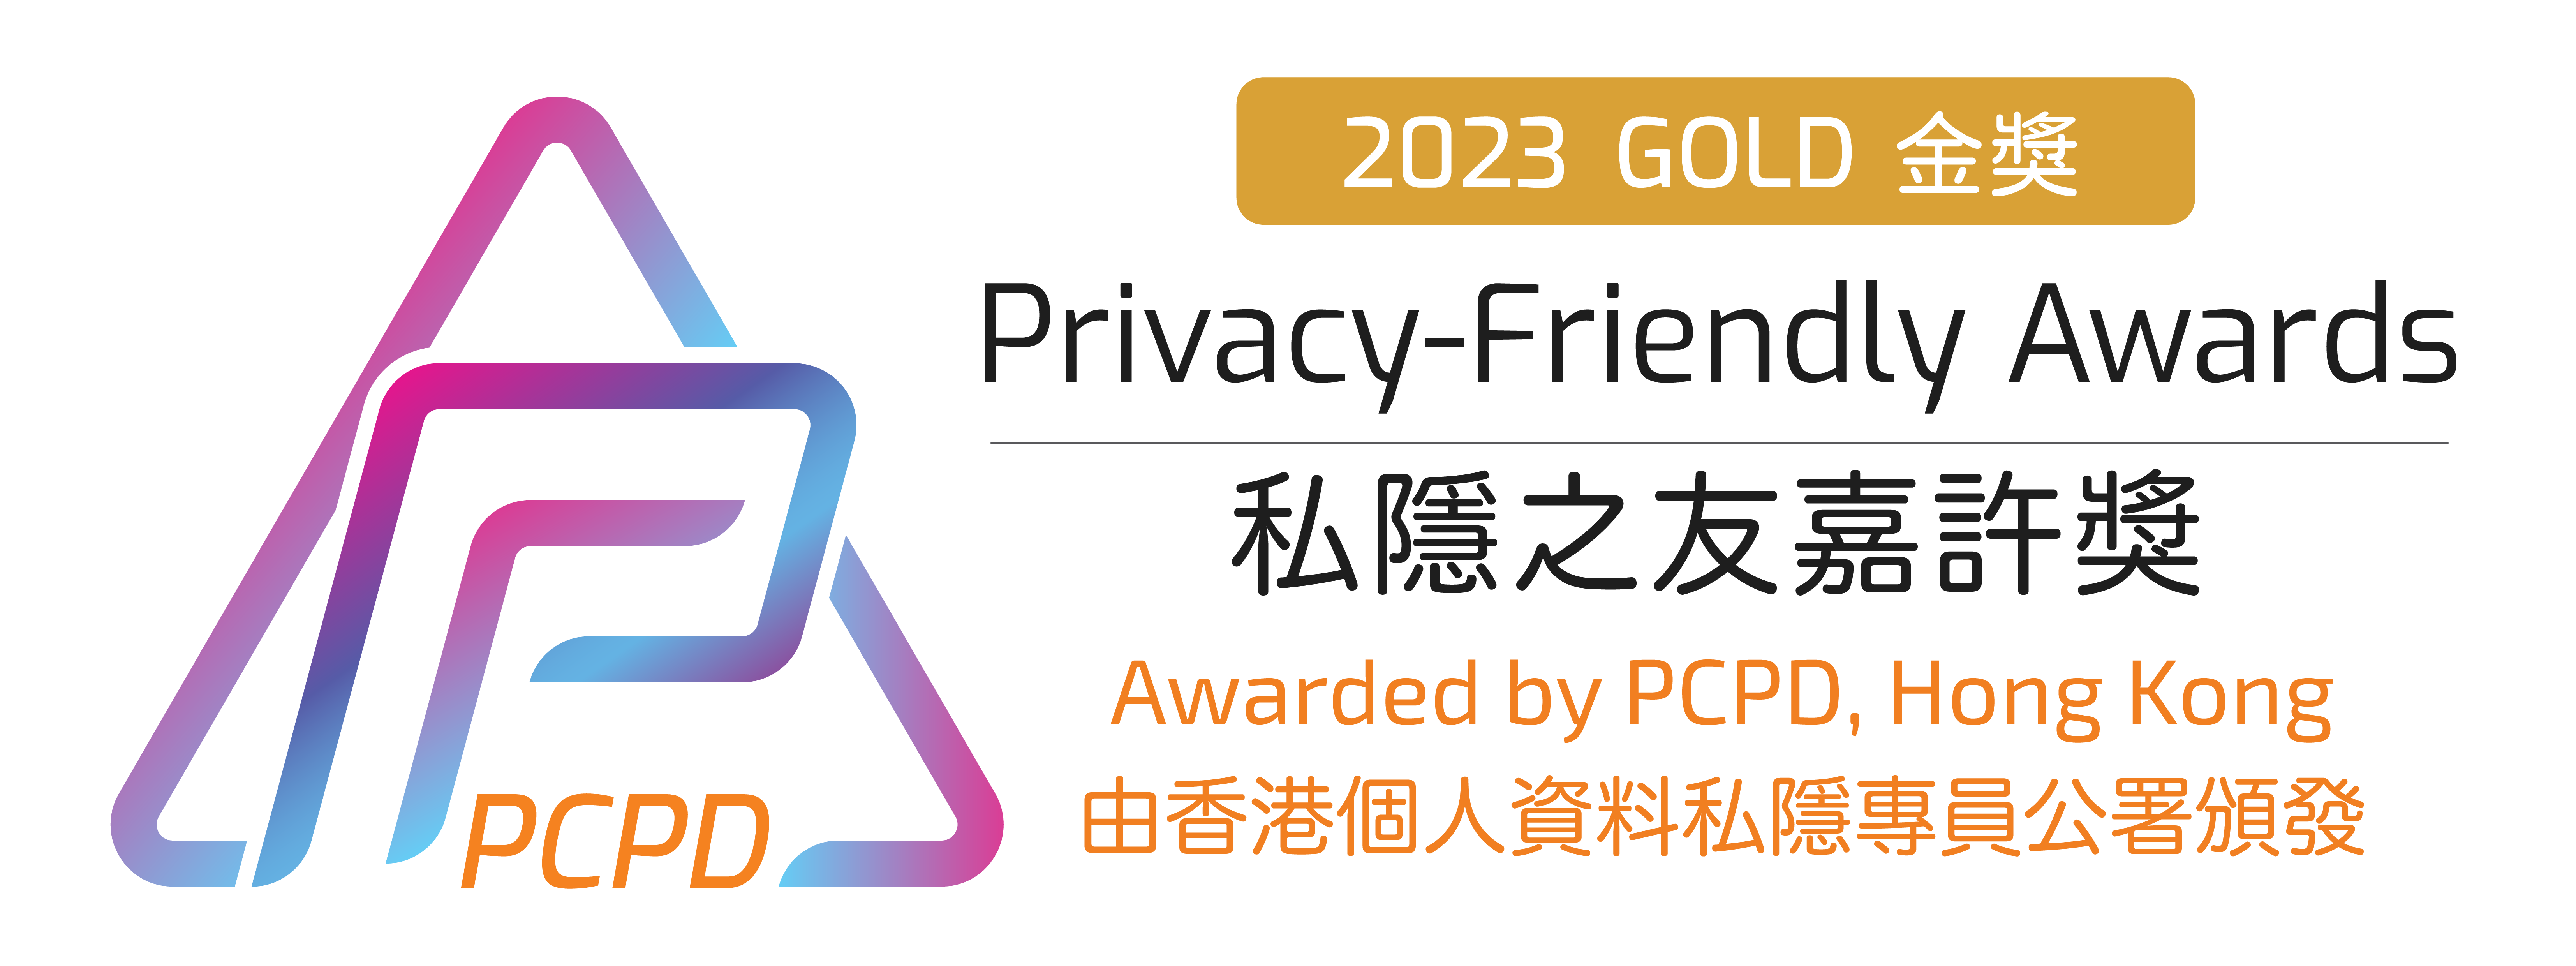 Privacy-Friendly Awards 2023 – Gold Award